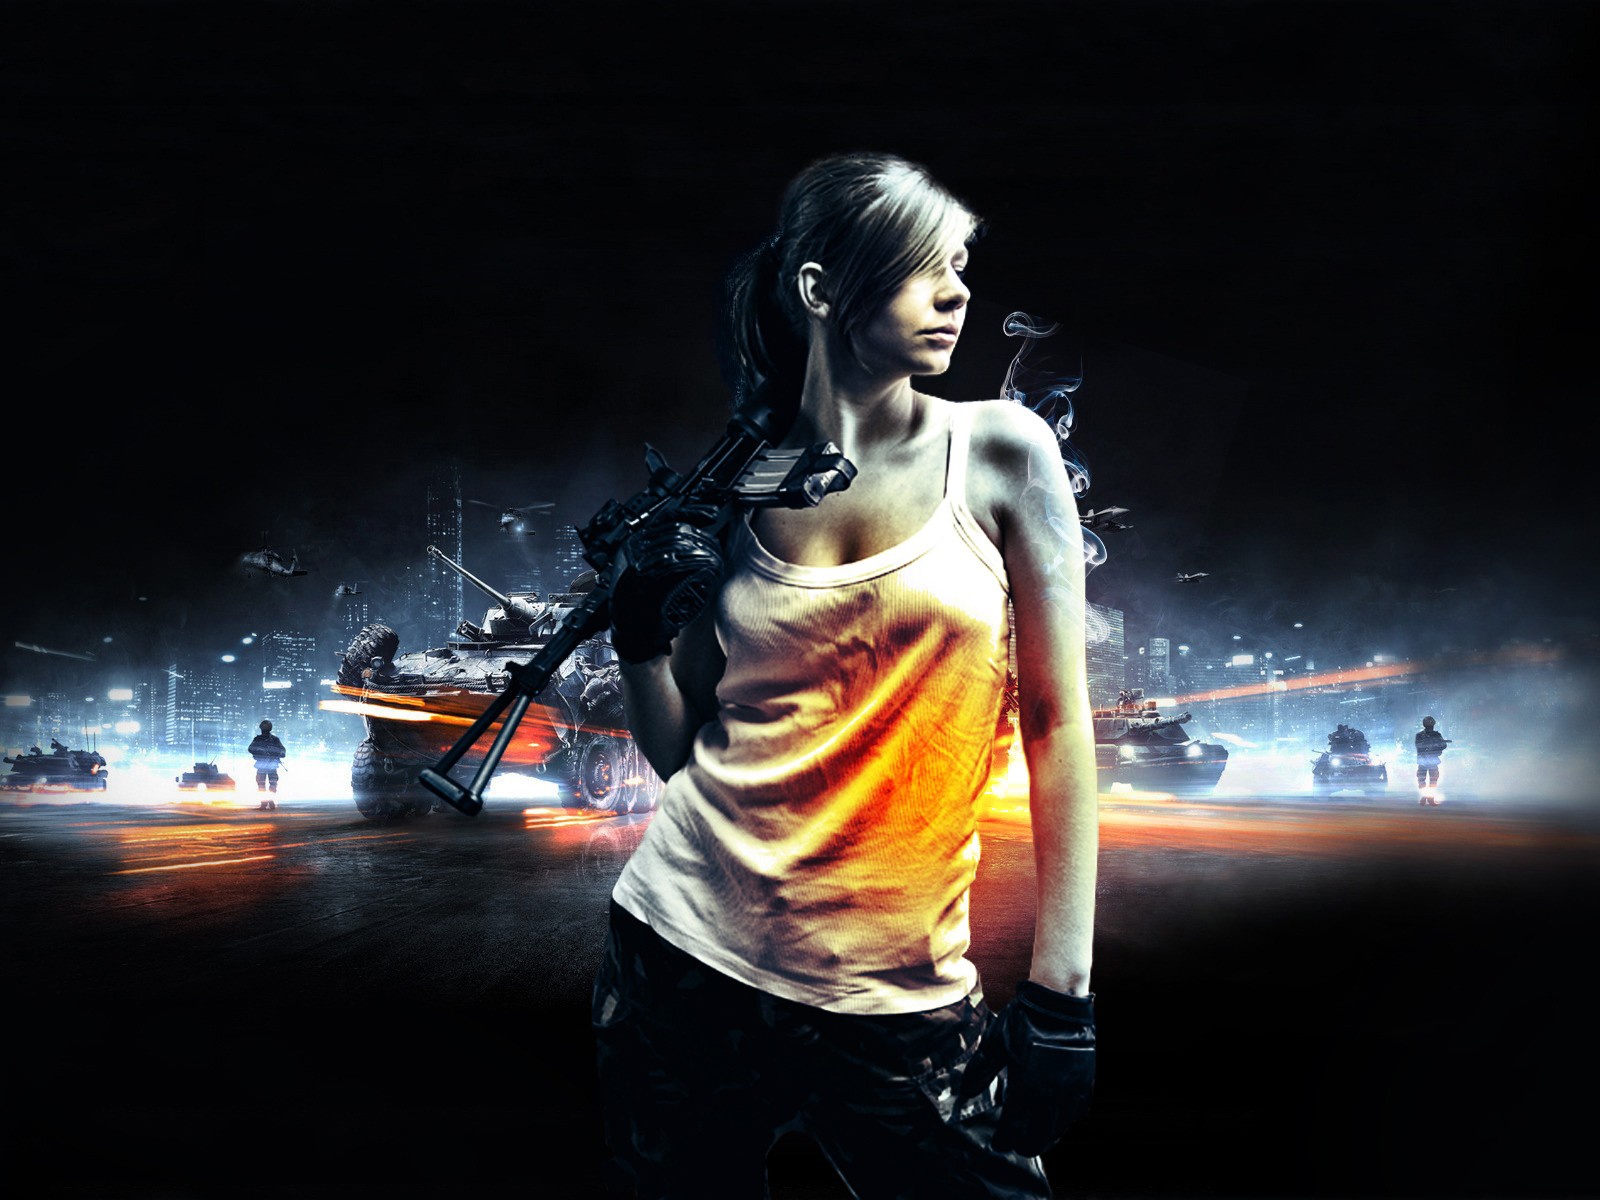 Download Battlefield 3 Girl And Gun Wallpaper In 1600X1200